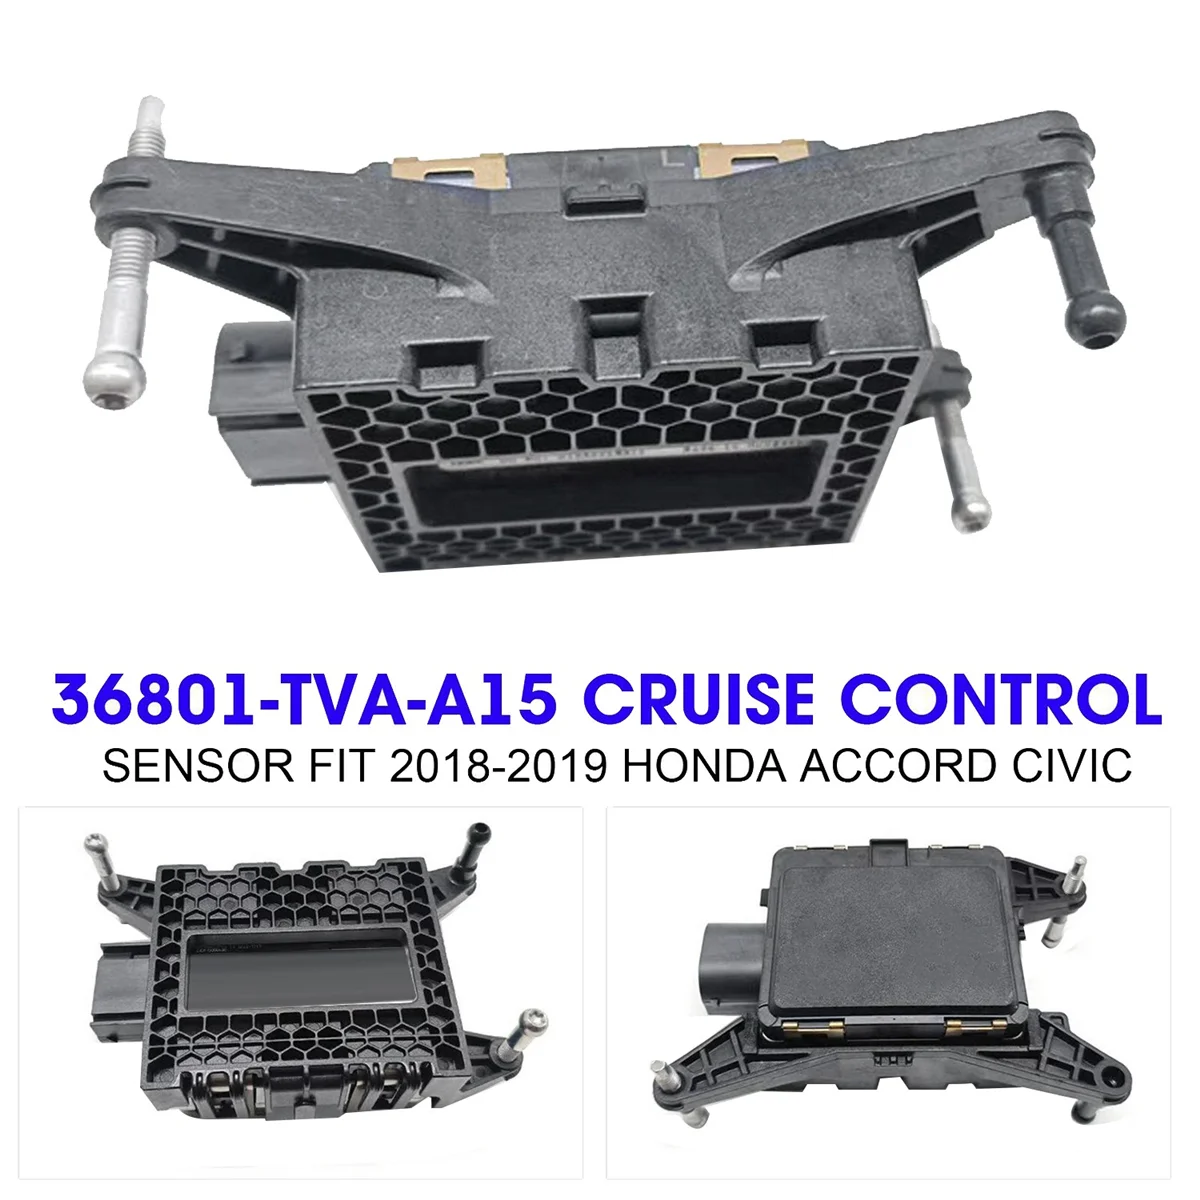 

36801-TVA-A15 / 36803-TVA-A16 New Adaptive Cruise Radar Control Sensor for 2018-2019 Honda Accord Civic